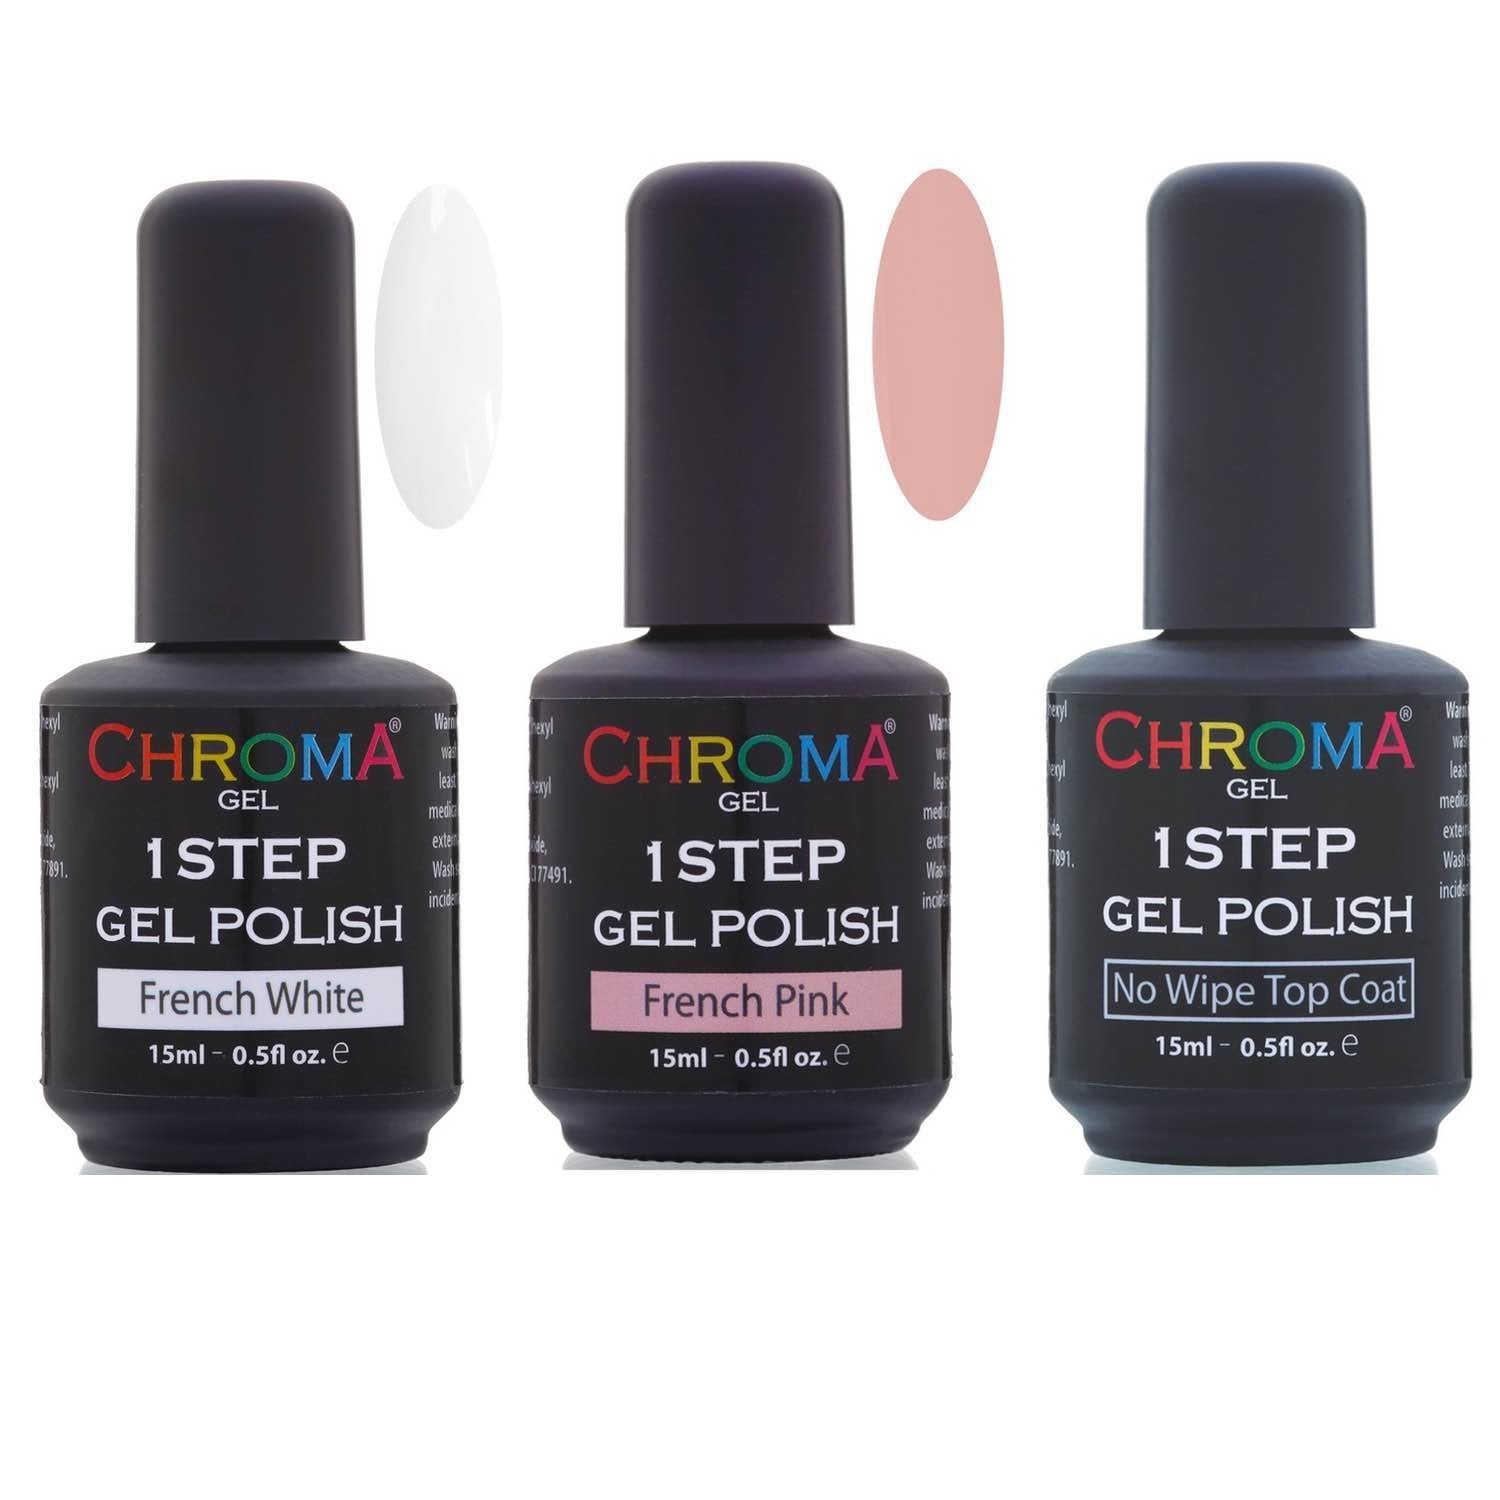 Chroma Gel 1 Step Gel Polish French Manicure Set - Beauty Hair Products LtdChroma Gel